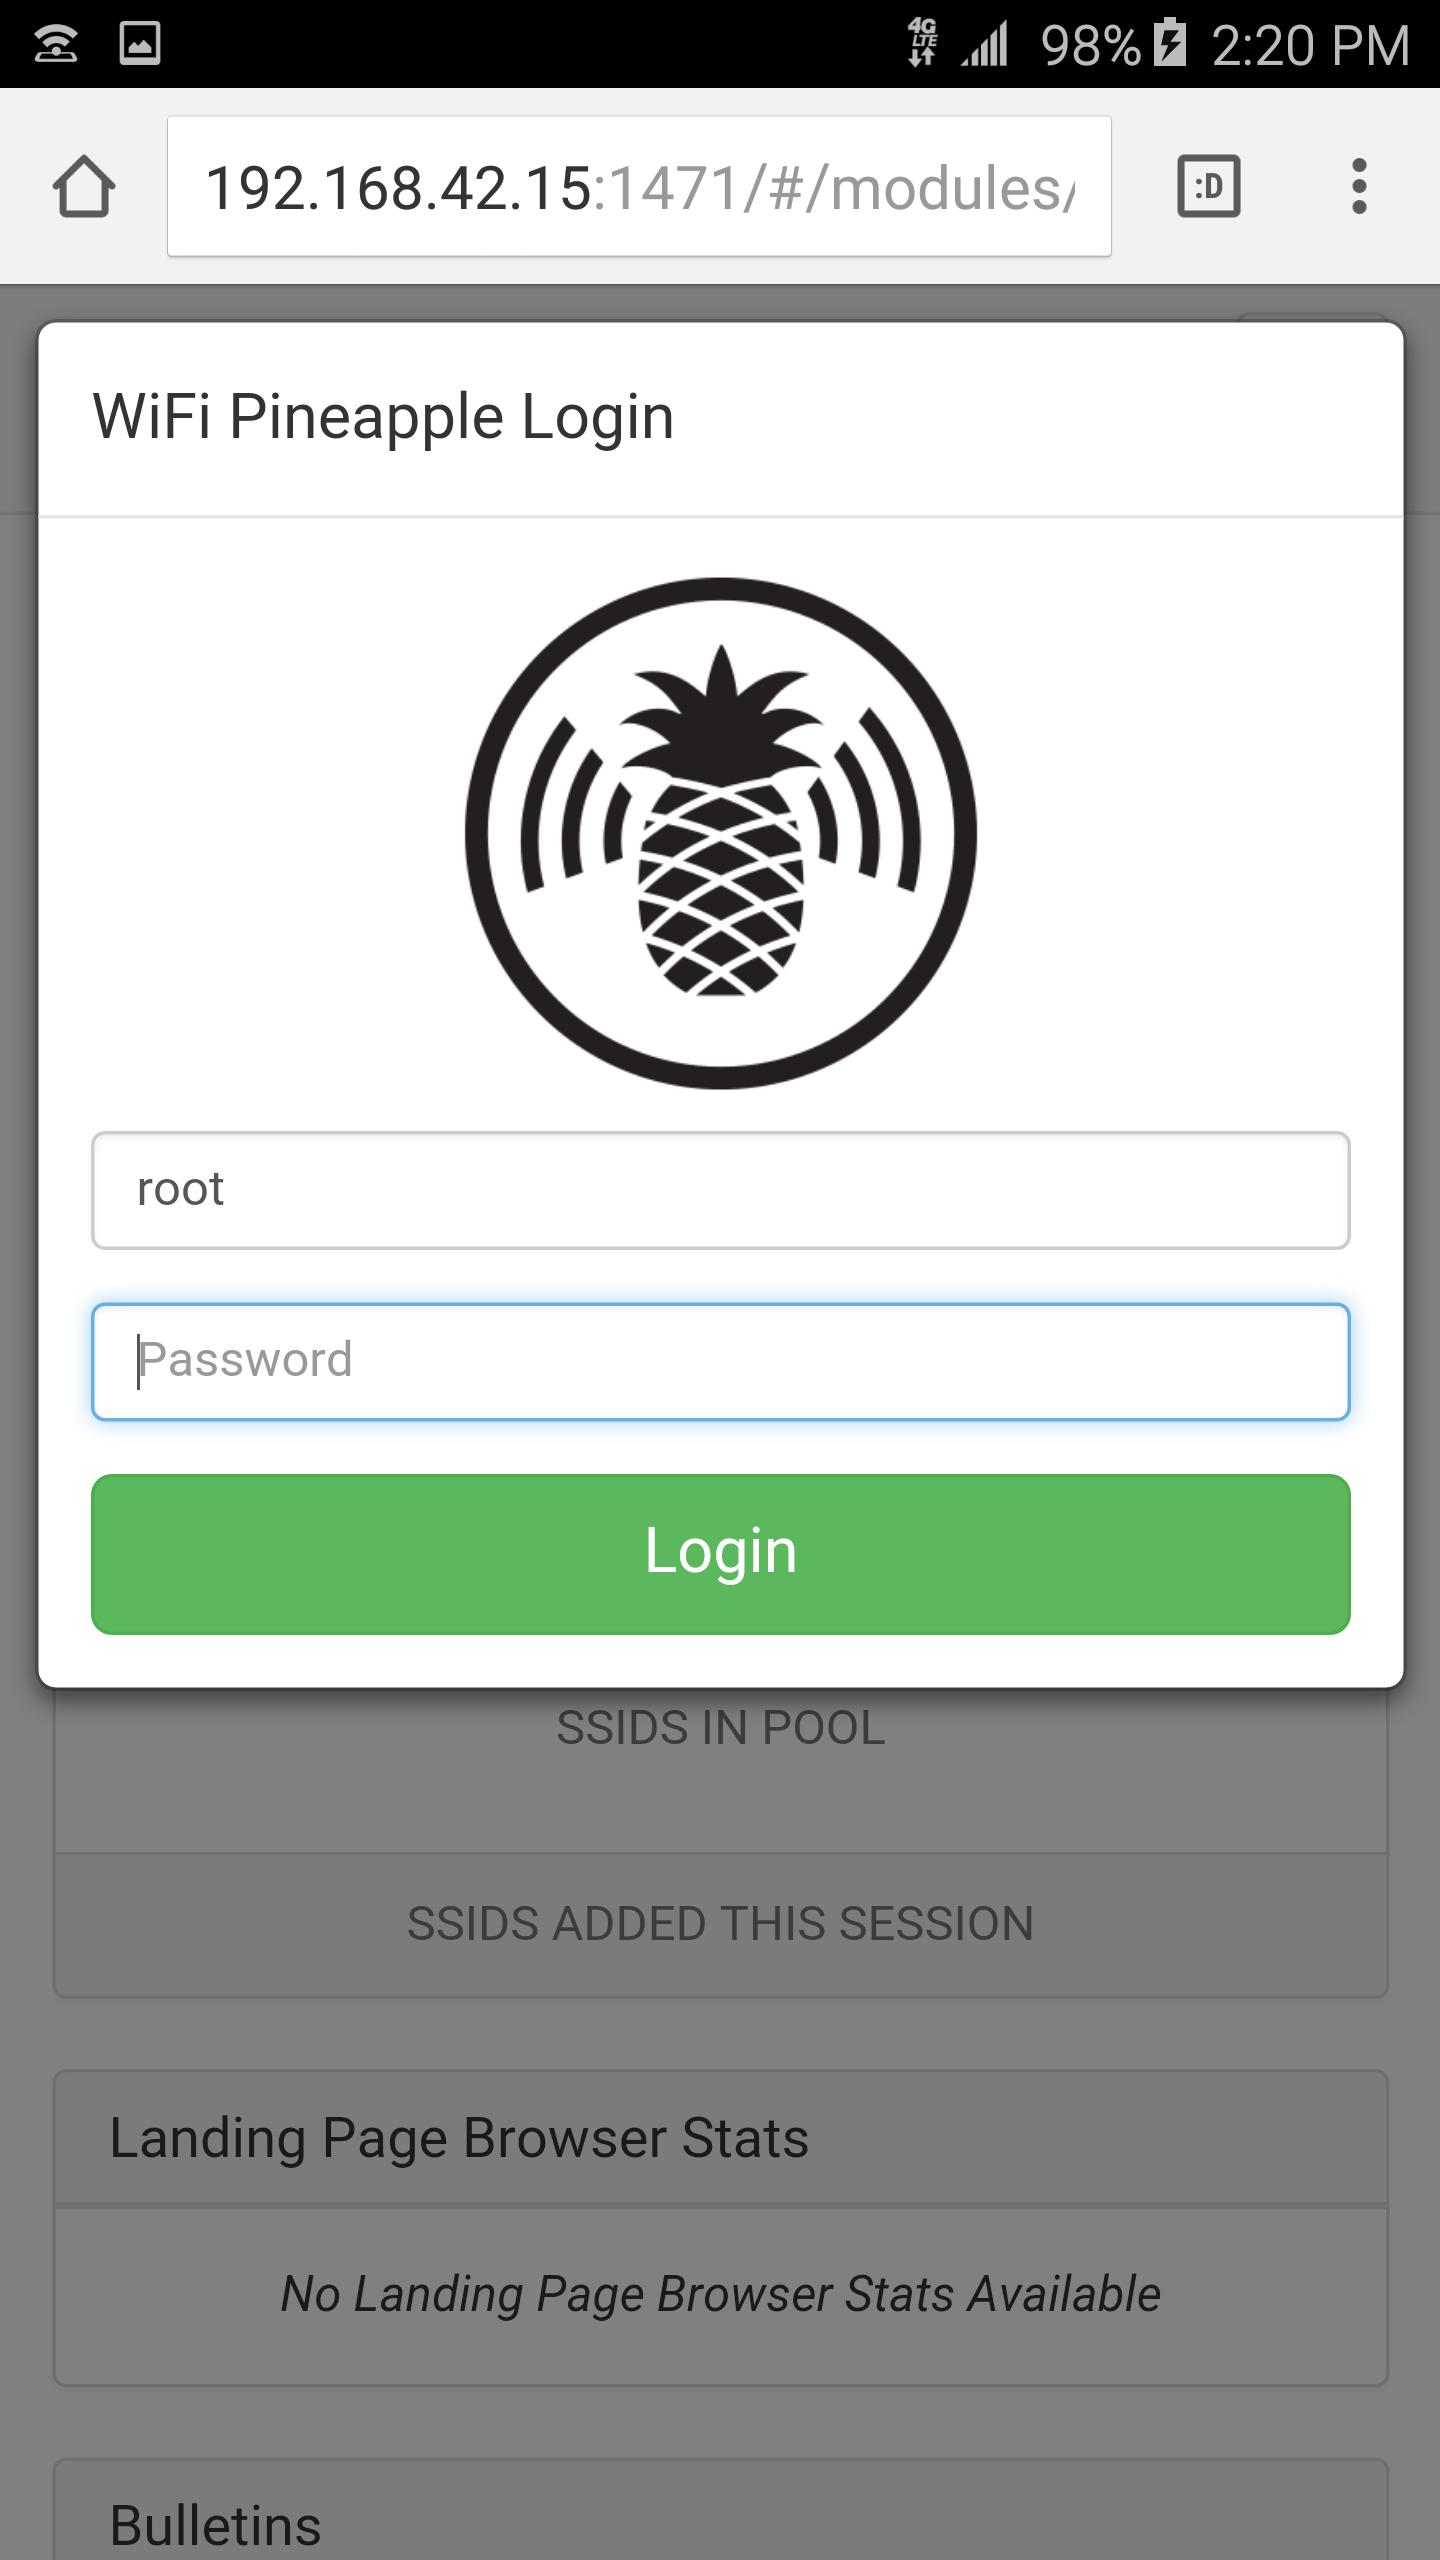 Wi-Fi Pineapple. Hotspot Pineapple BLACKBERRY. WIFI Pineapple install Linux. WIFI Pineapple logo.